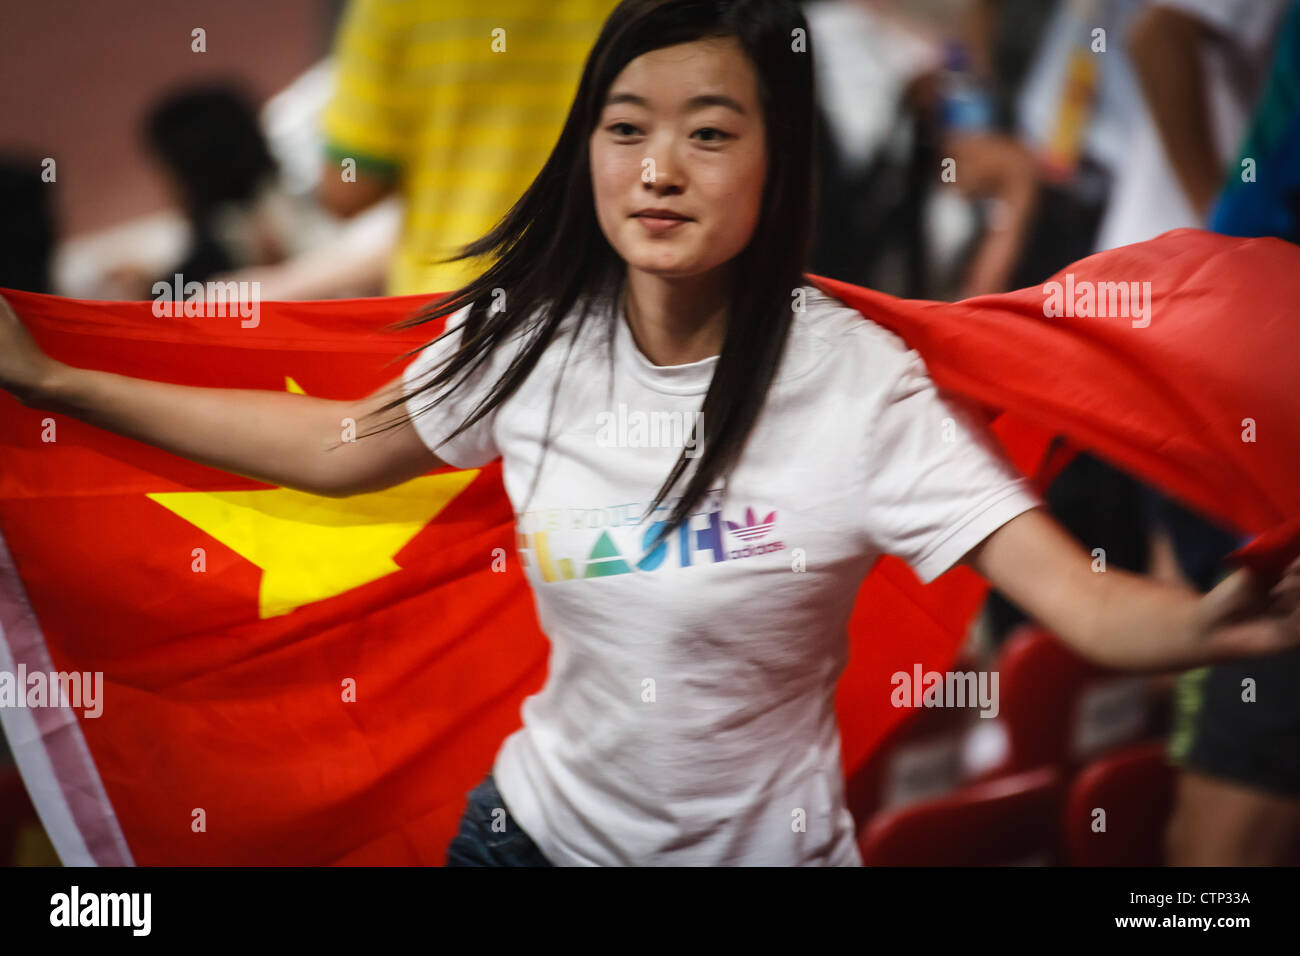 BEIJING, CHINA - AUGUST 18, 2008: Female spectator celebrates Summer Games by waving big Chinese Flag in Birds Nest Stadium Stock Photo